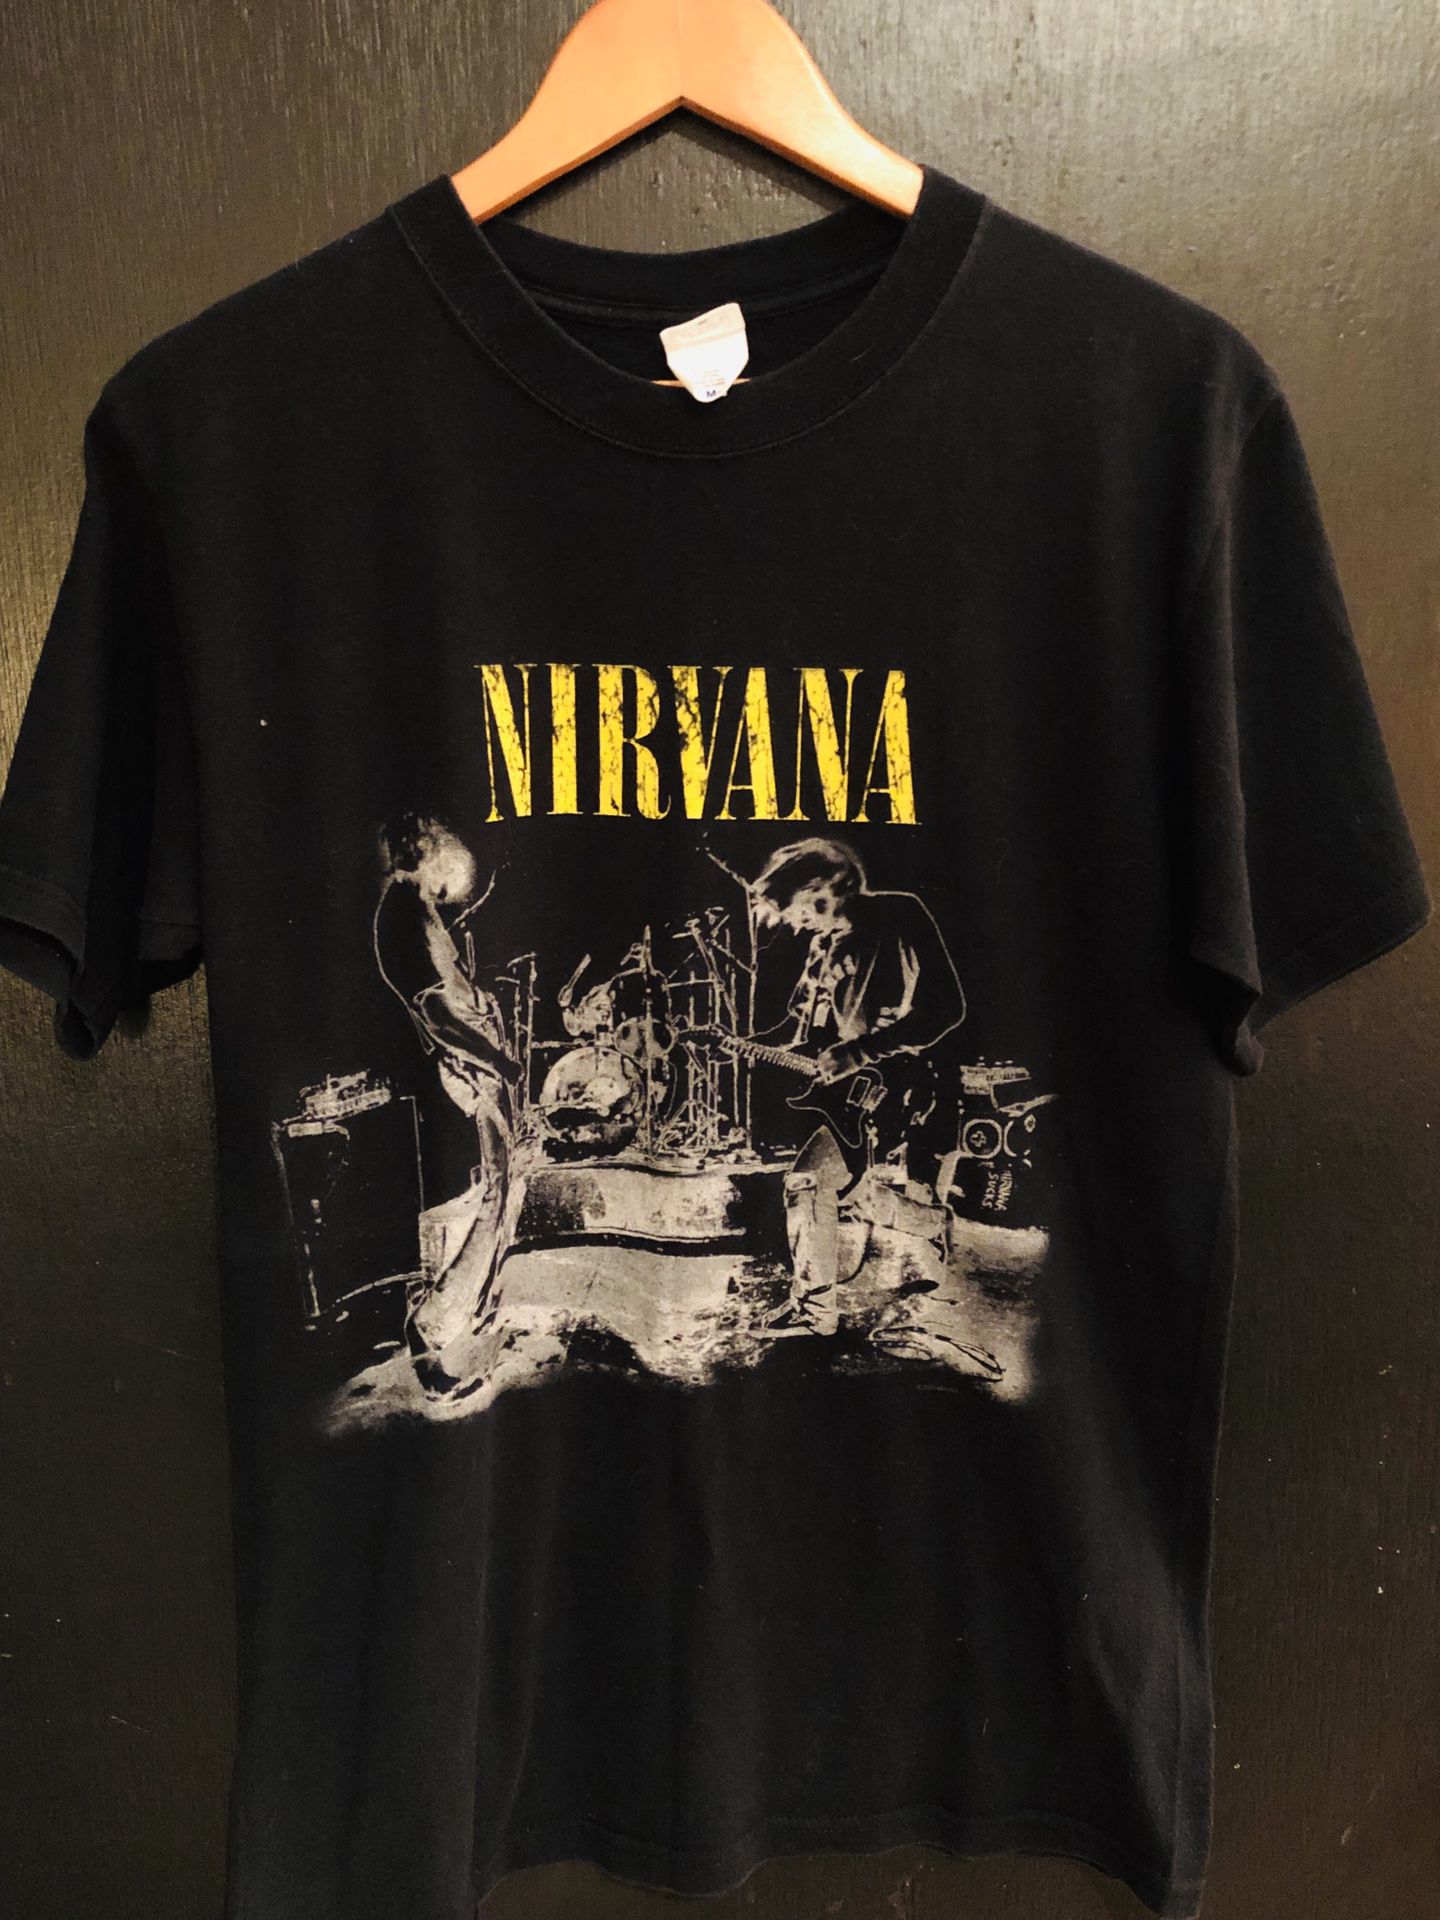 2005 Nirvana T shirt, band shirt, rock shirt